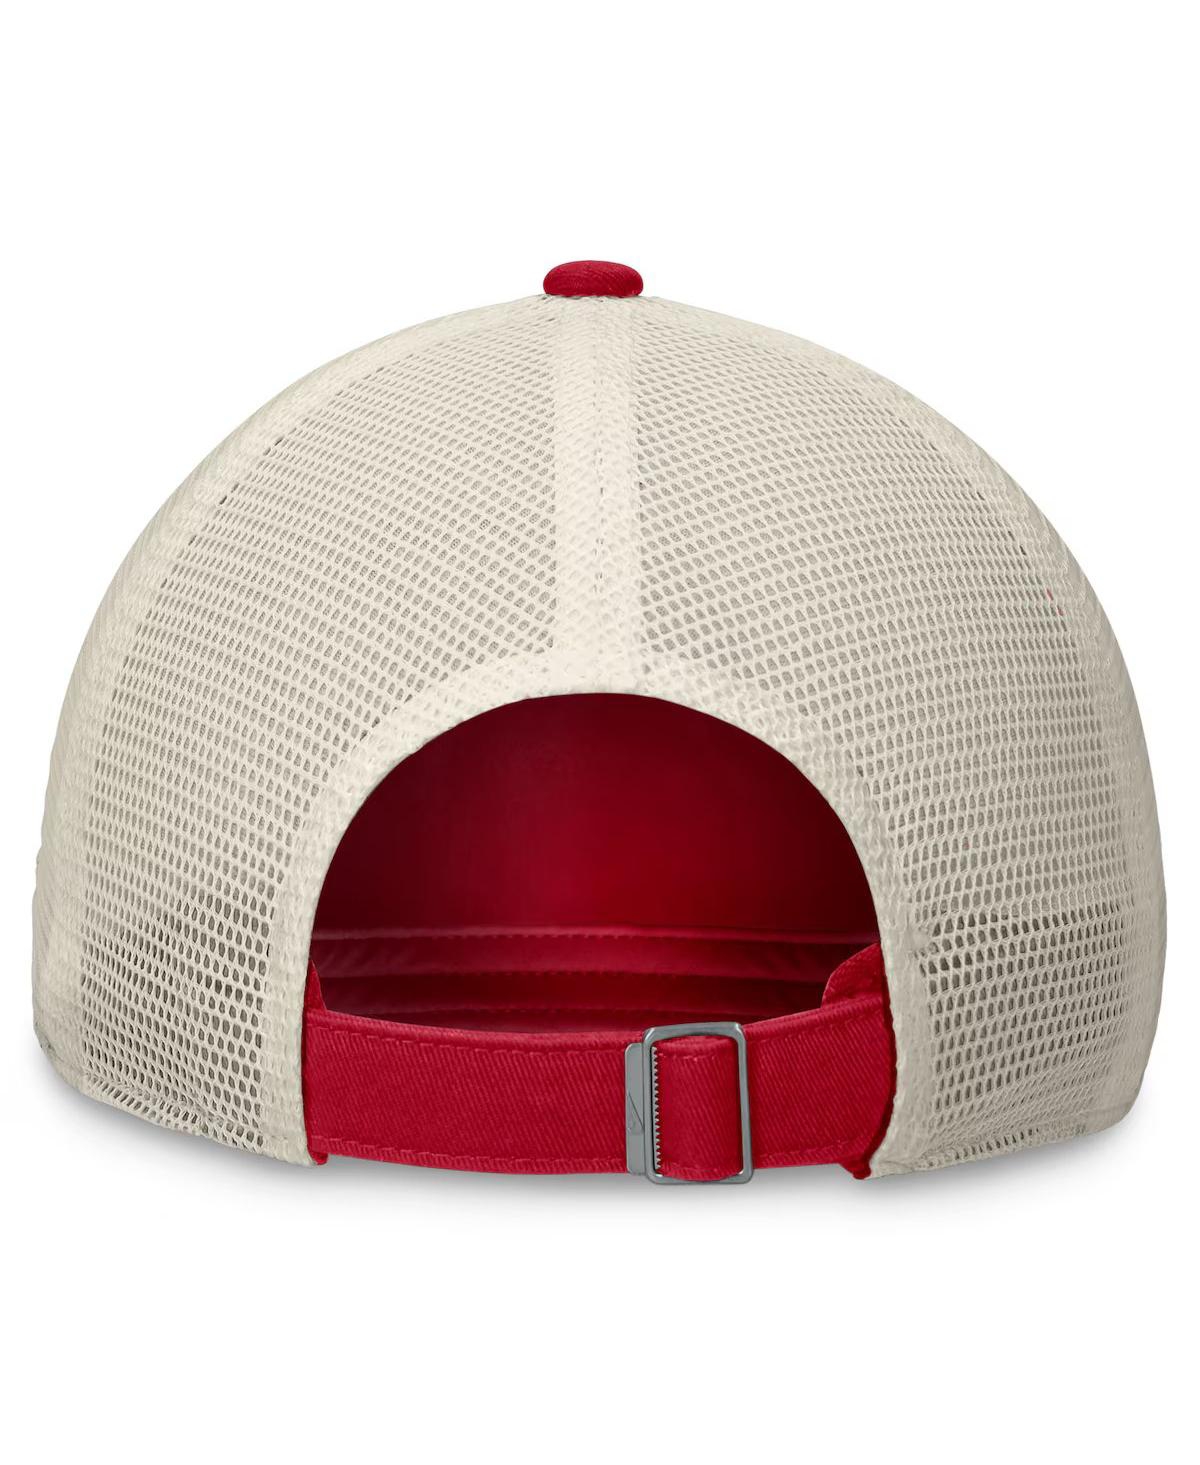 Shop Nike Men's Red St. Louis Cardinals Cooperstown Collection Rewind Club Trucker Adjustable Hat In Gym Rlight